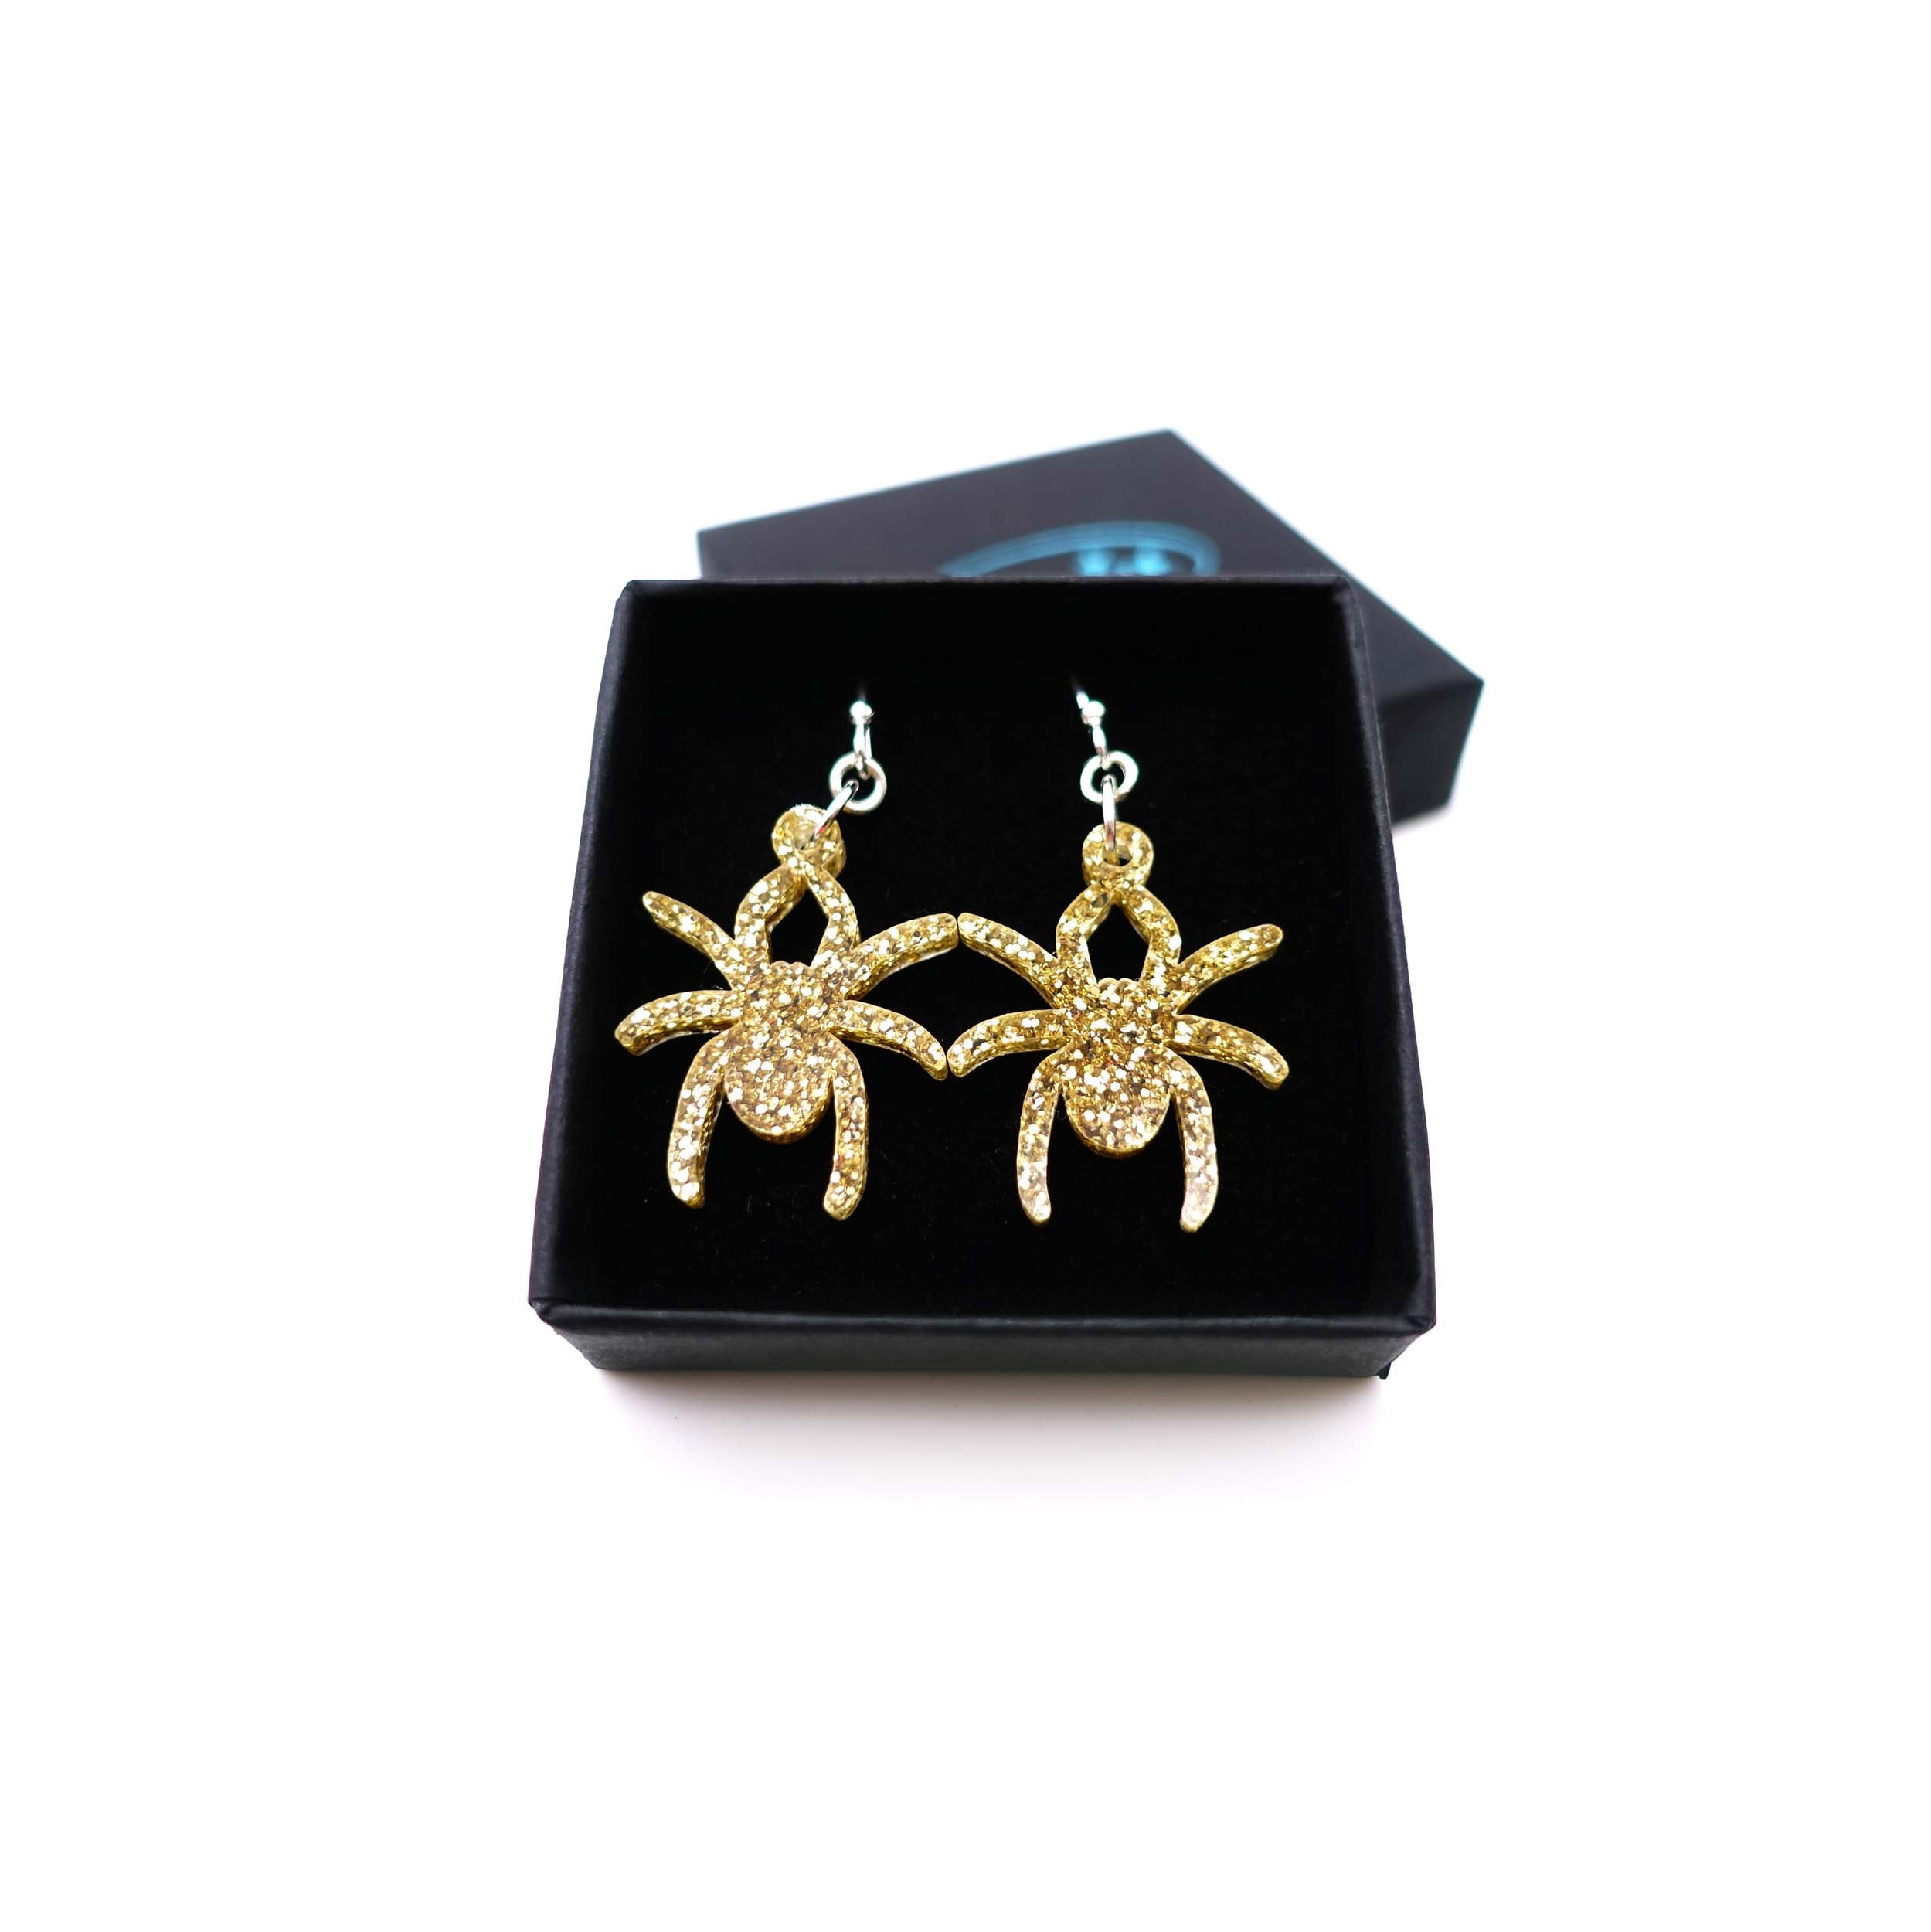 Lady Hale commemorative spider earrings in gold glitter shown in box.